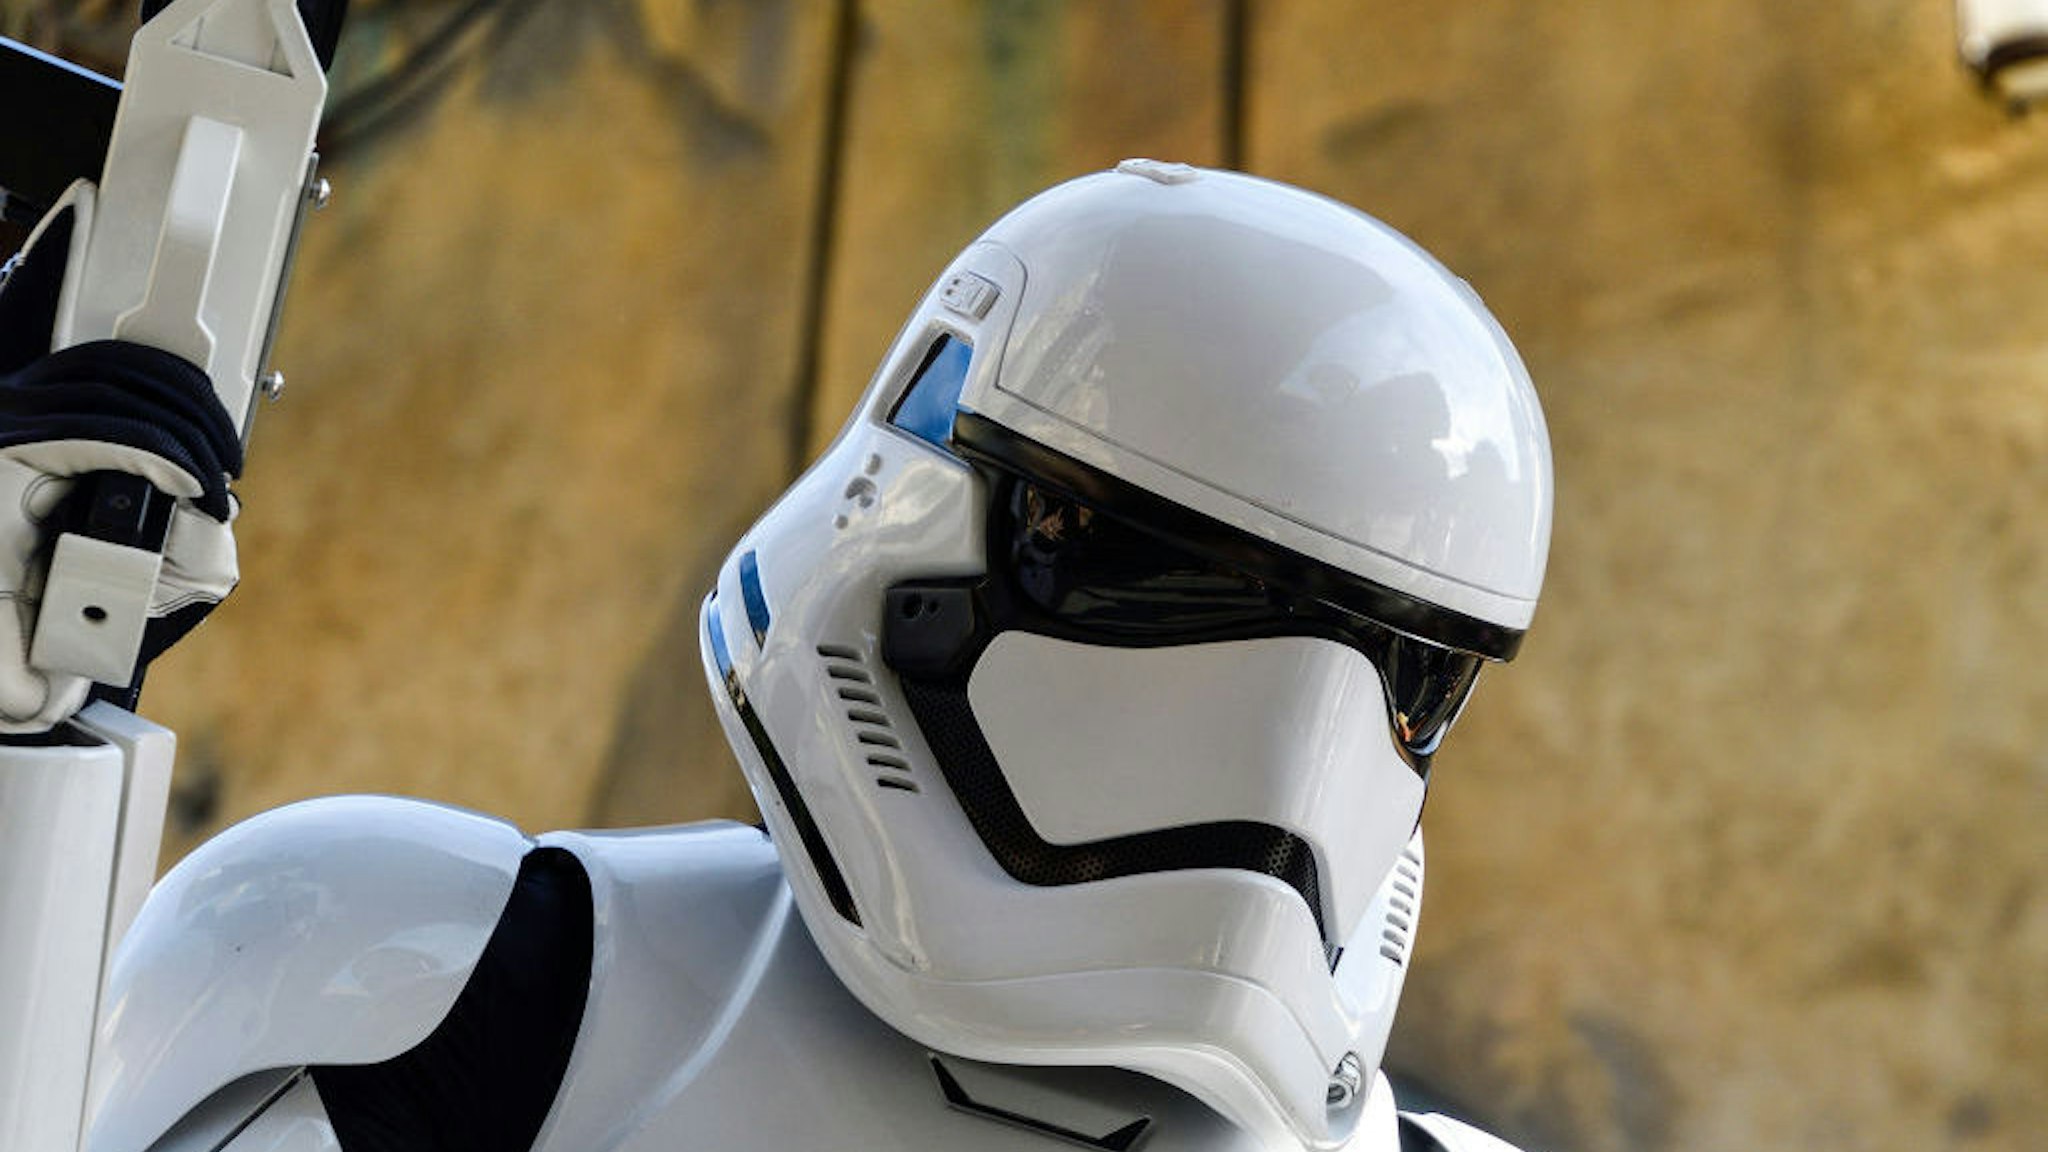 A stormtrooper at Star Wars: Galaxy"u2019s Edge inside Disneyland in Anaheim, CA, on Tuesday, Jan 7, 2020. (Photo by Jeff Gritchen, Orange County Register/SCNG)